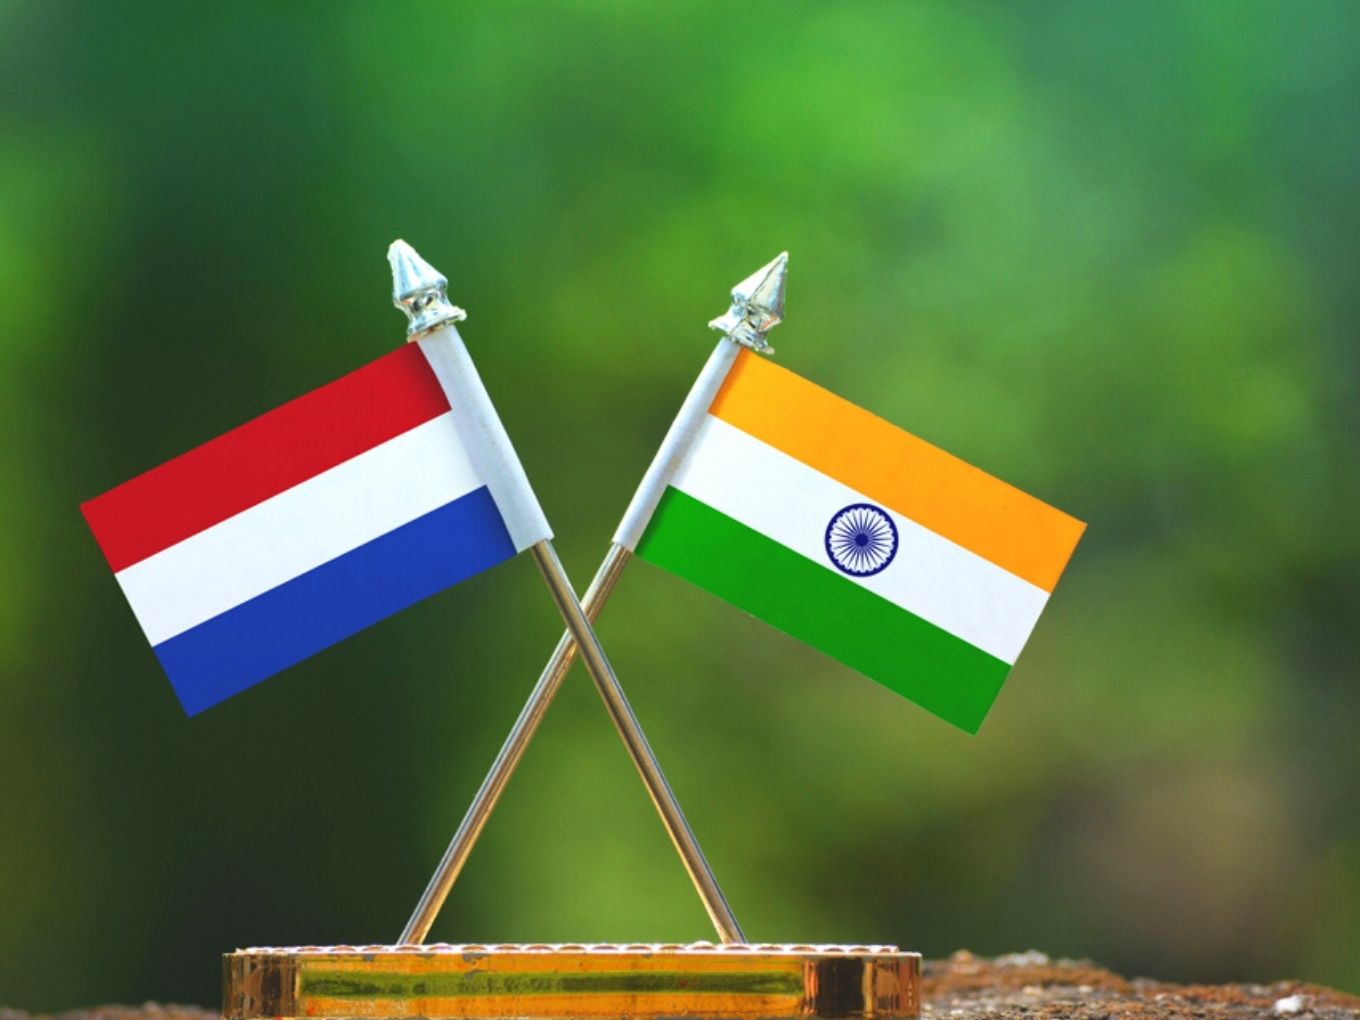 Holland’s Hague Business Agency, Karnataka Collaborate To Take 50 Startups To Europe